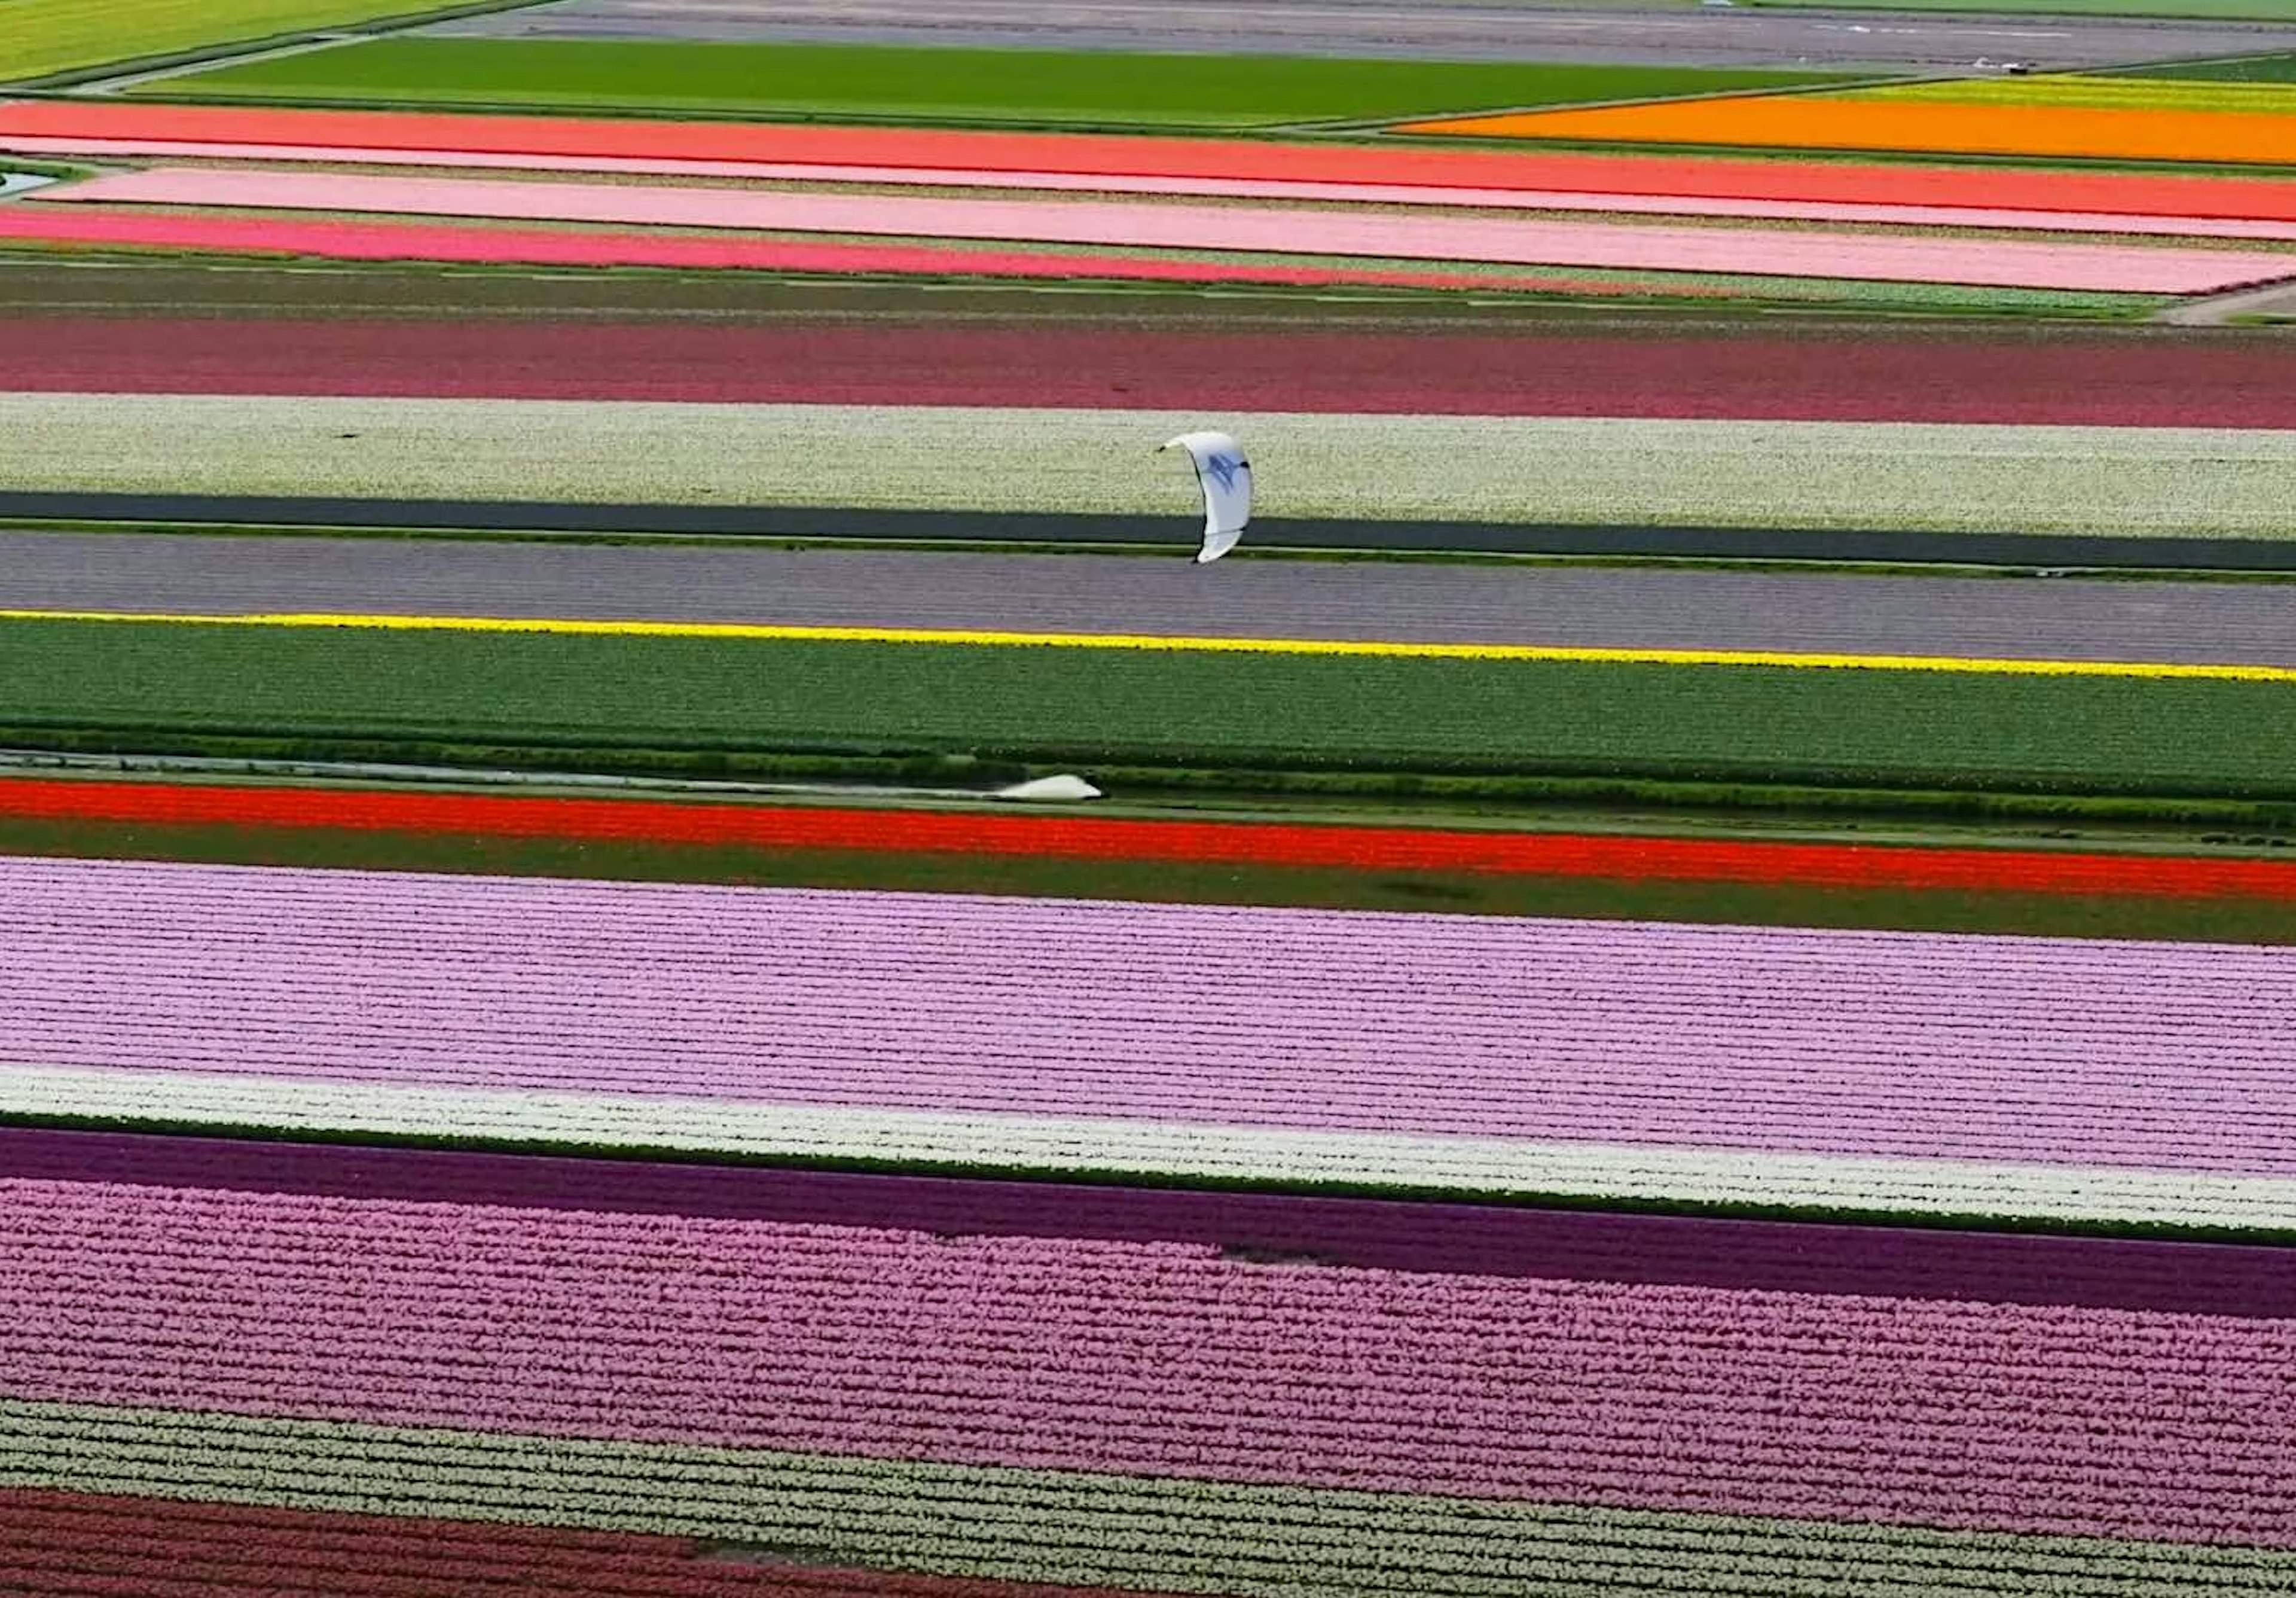 Kiting-in-fields-of-tulips